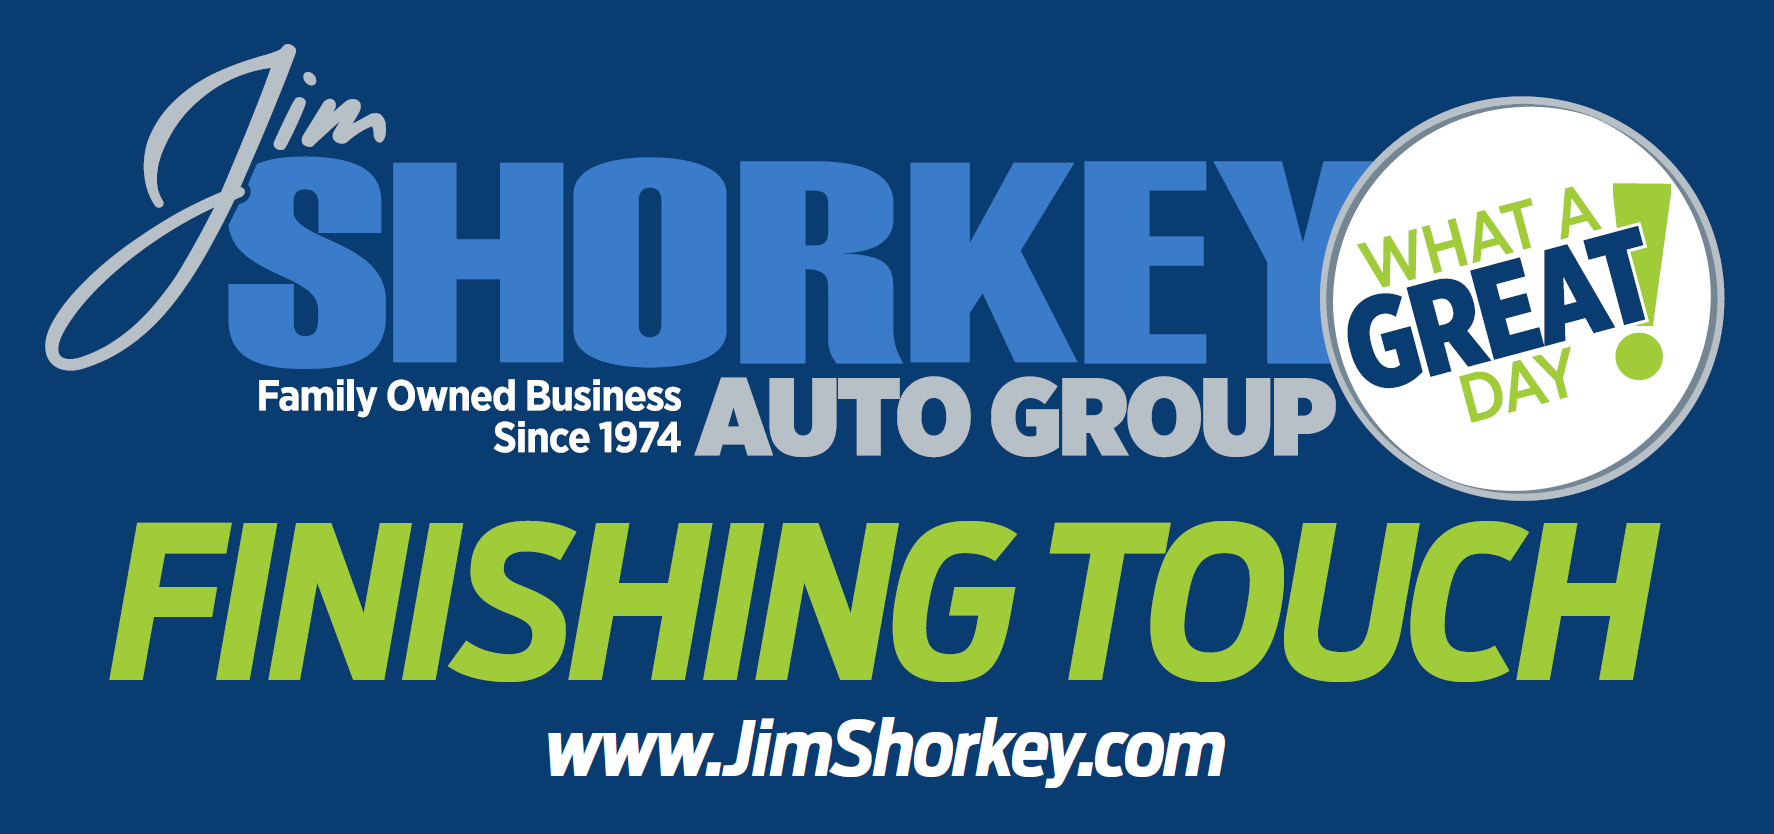 Jim Shorkey Auto Group in Irwin PA